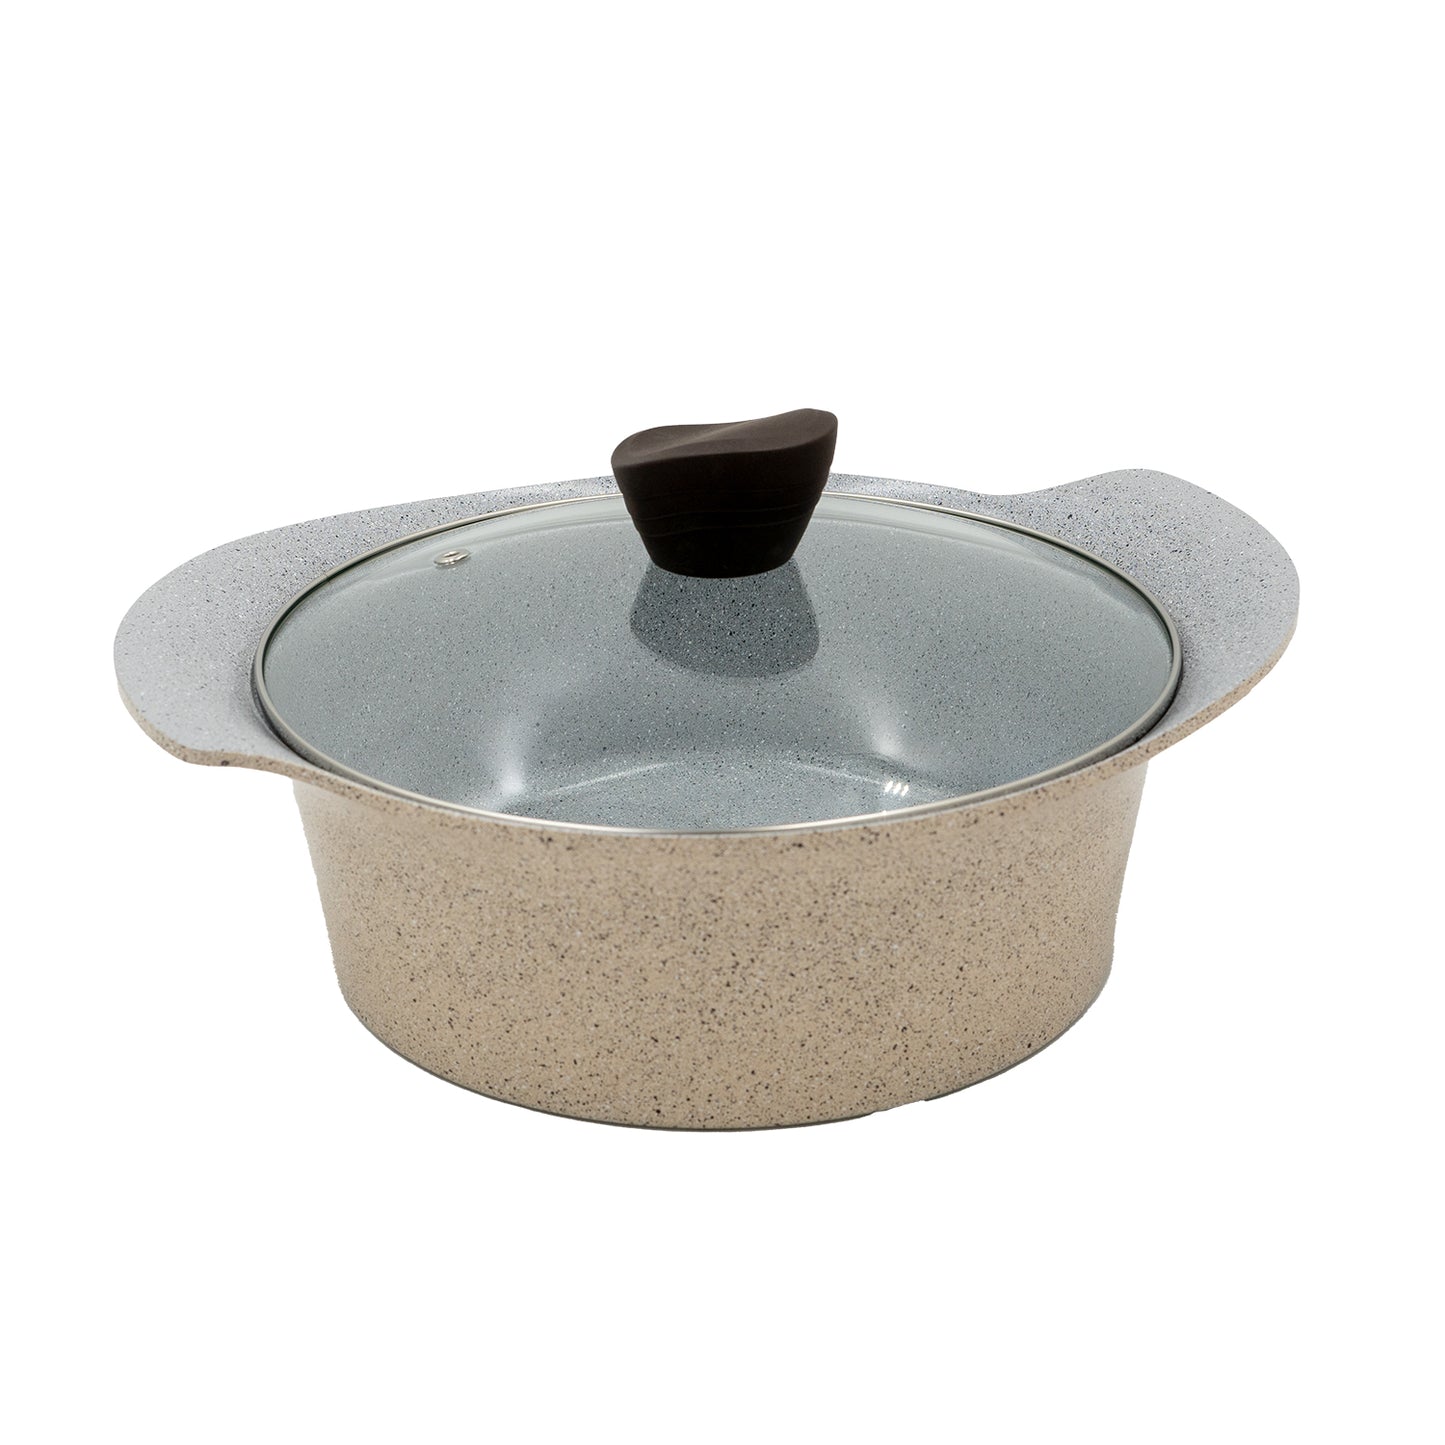 Ecook IH Ceramic Coating Stock Pot Low Beige 24cm